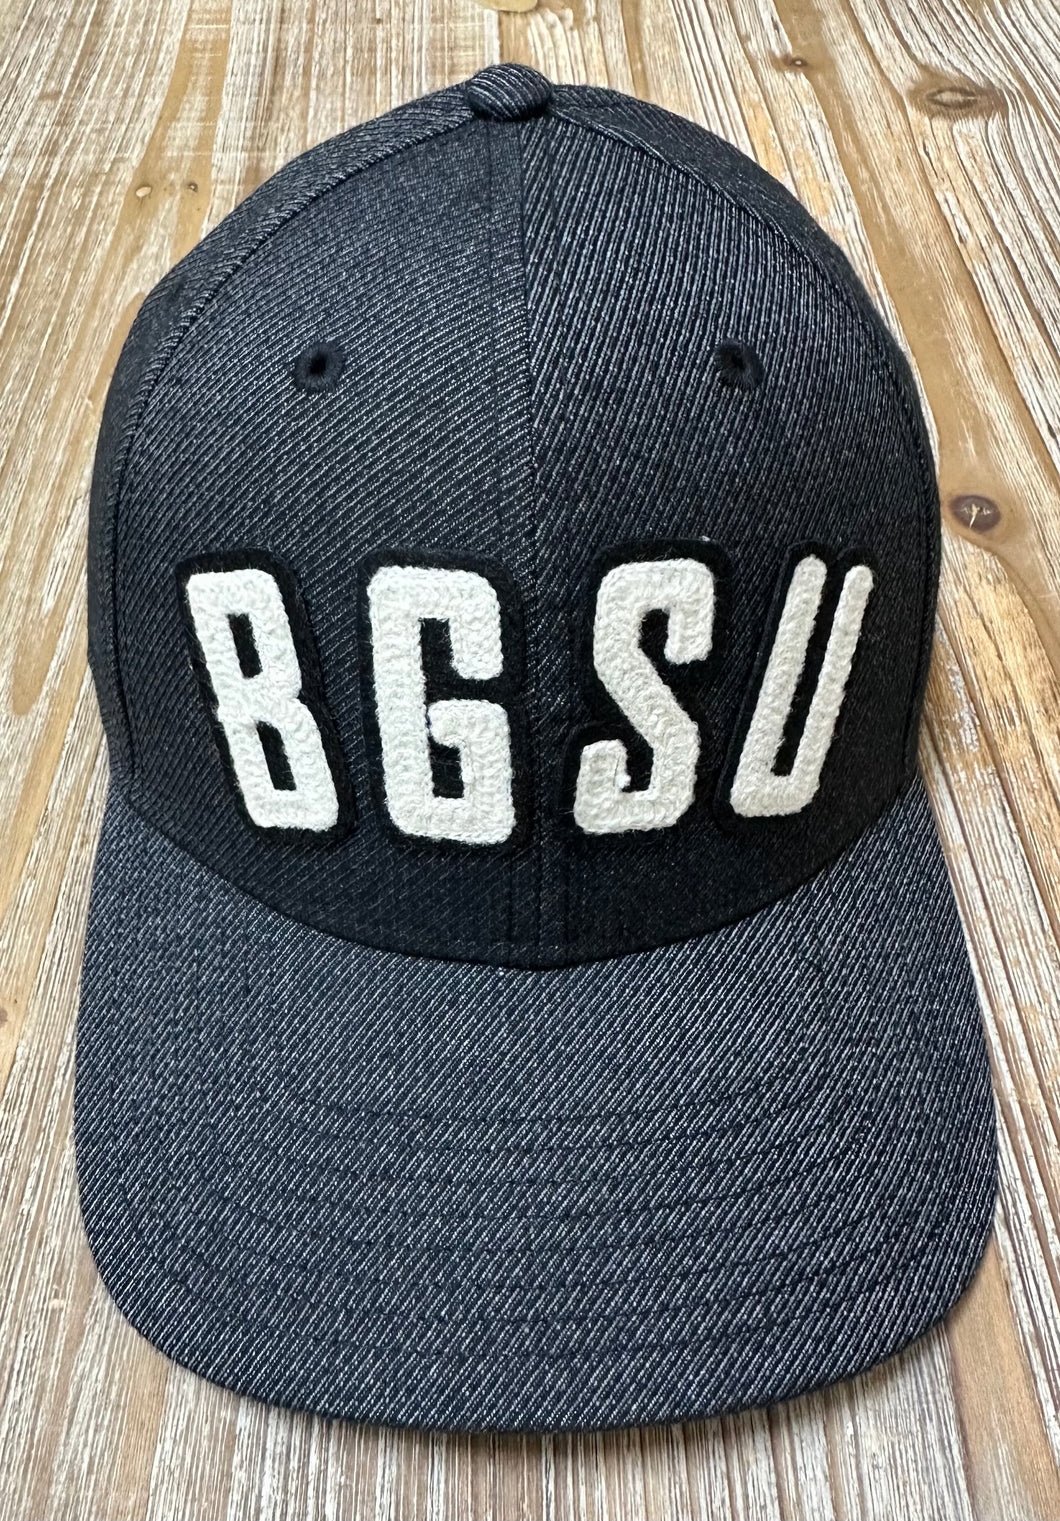 Game G2230 Black BGSU Snapback Hat